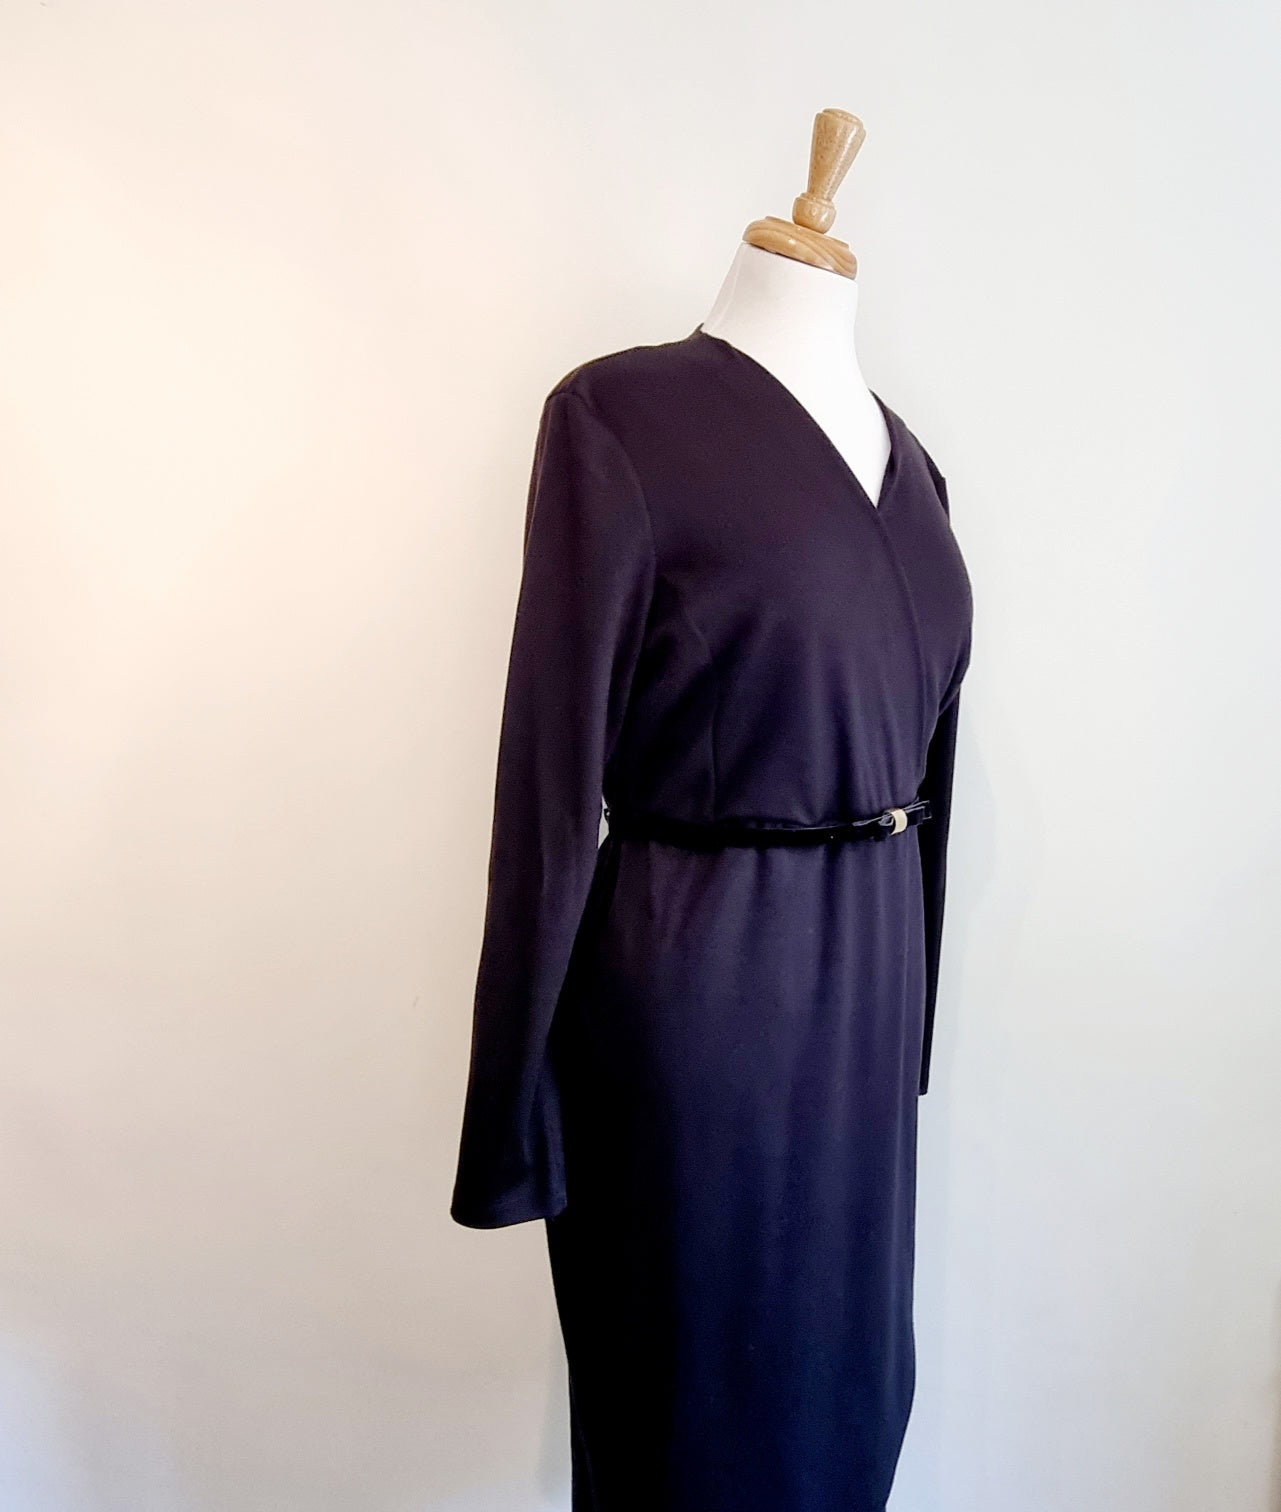 Truworths - Black long sleeve cross over top dress